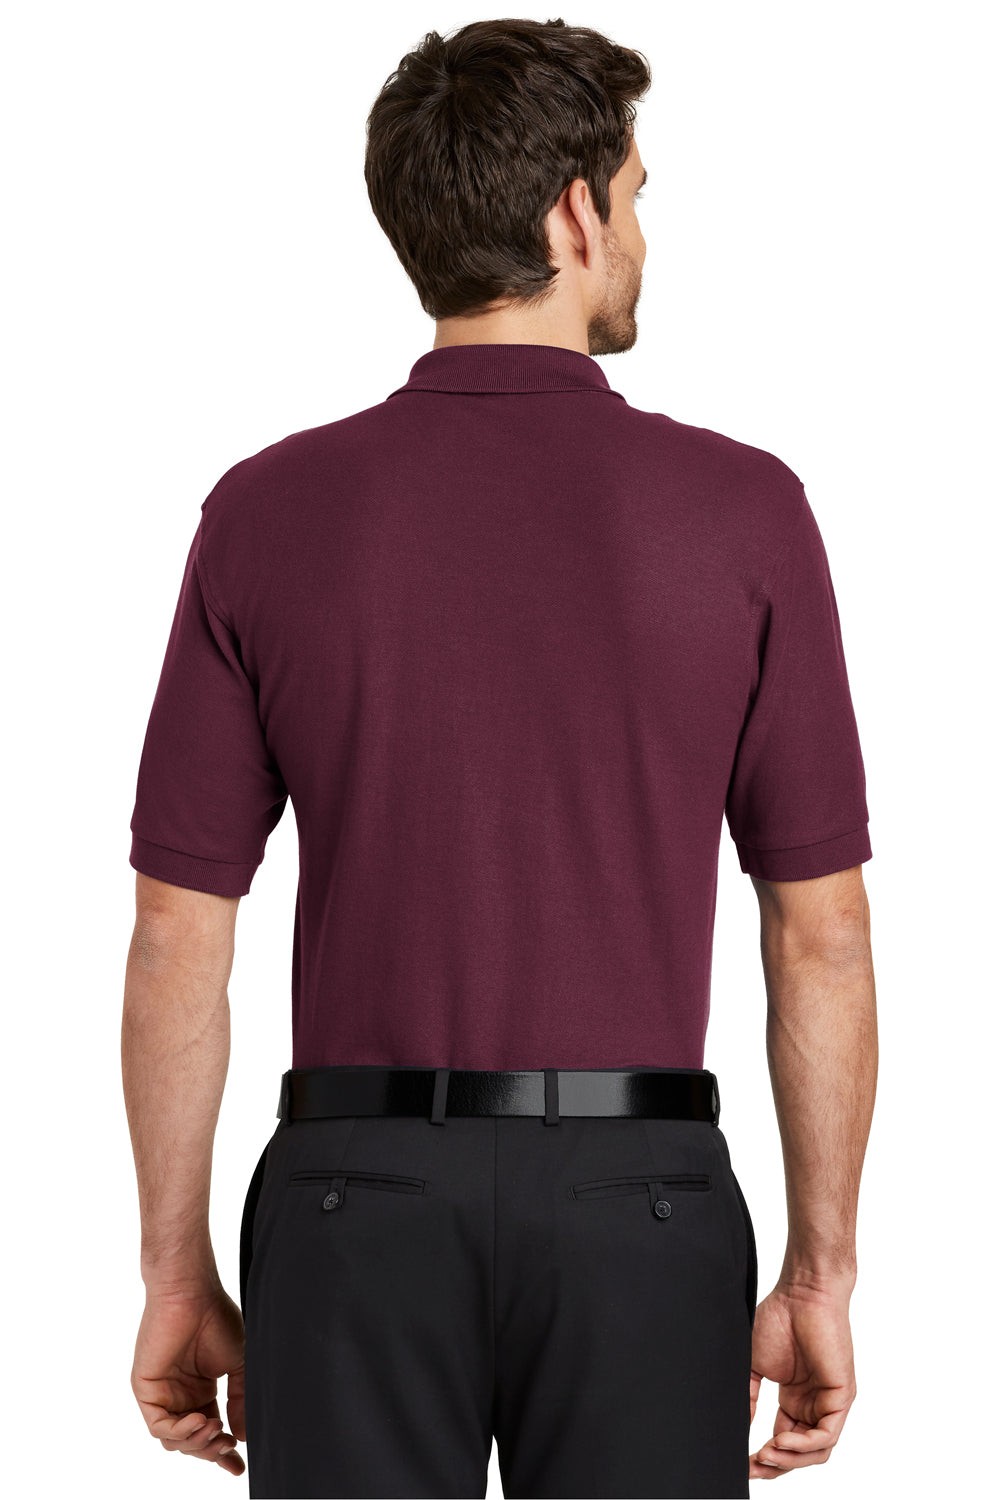 Port Authority K500P Mens Silk Touch Wrinkle Resistant Short Sleeve Polo Shirt w/ Pocket Burgundy Back